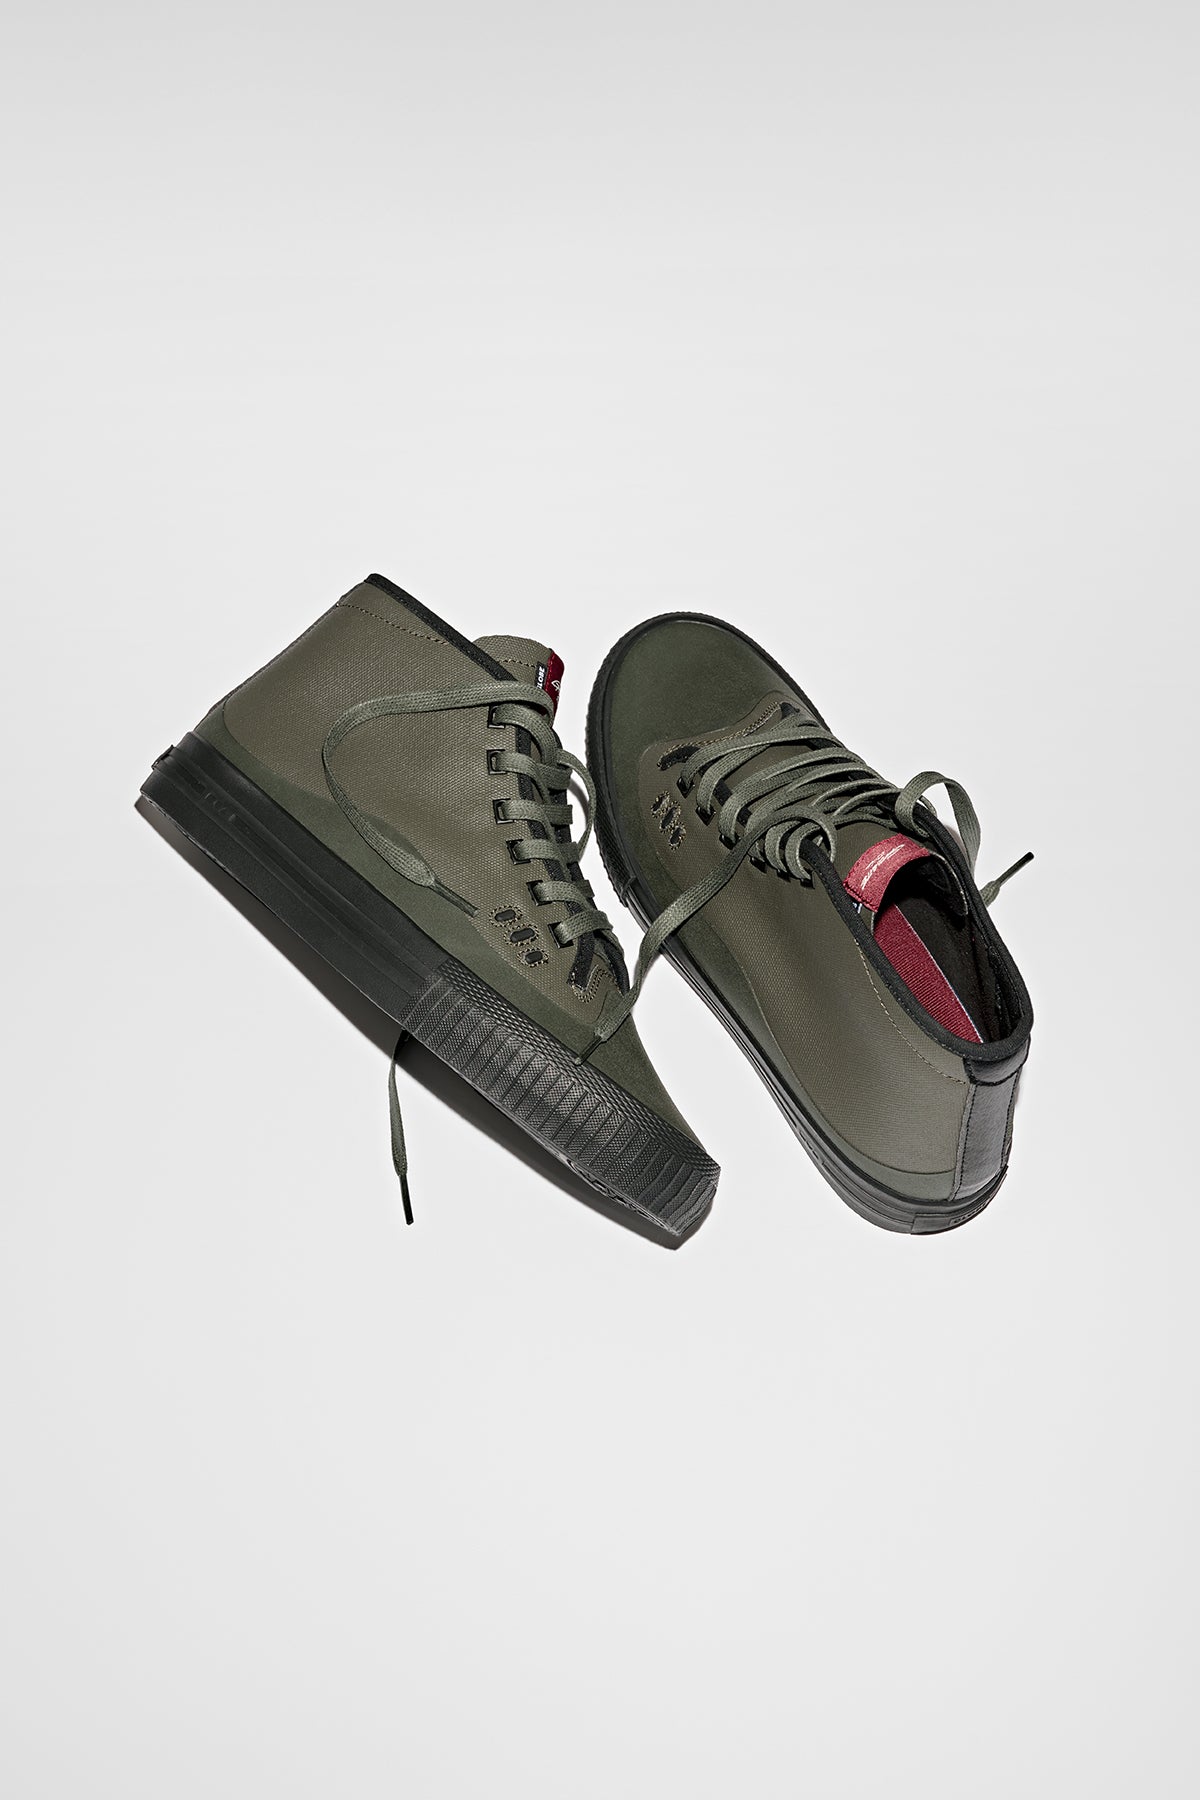 Globe - Gillette Mid - Oscuro Olive/Negro - skateboard Zapatos